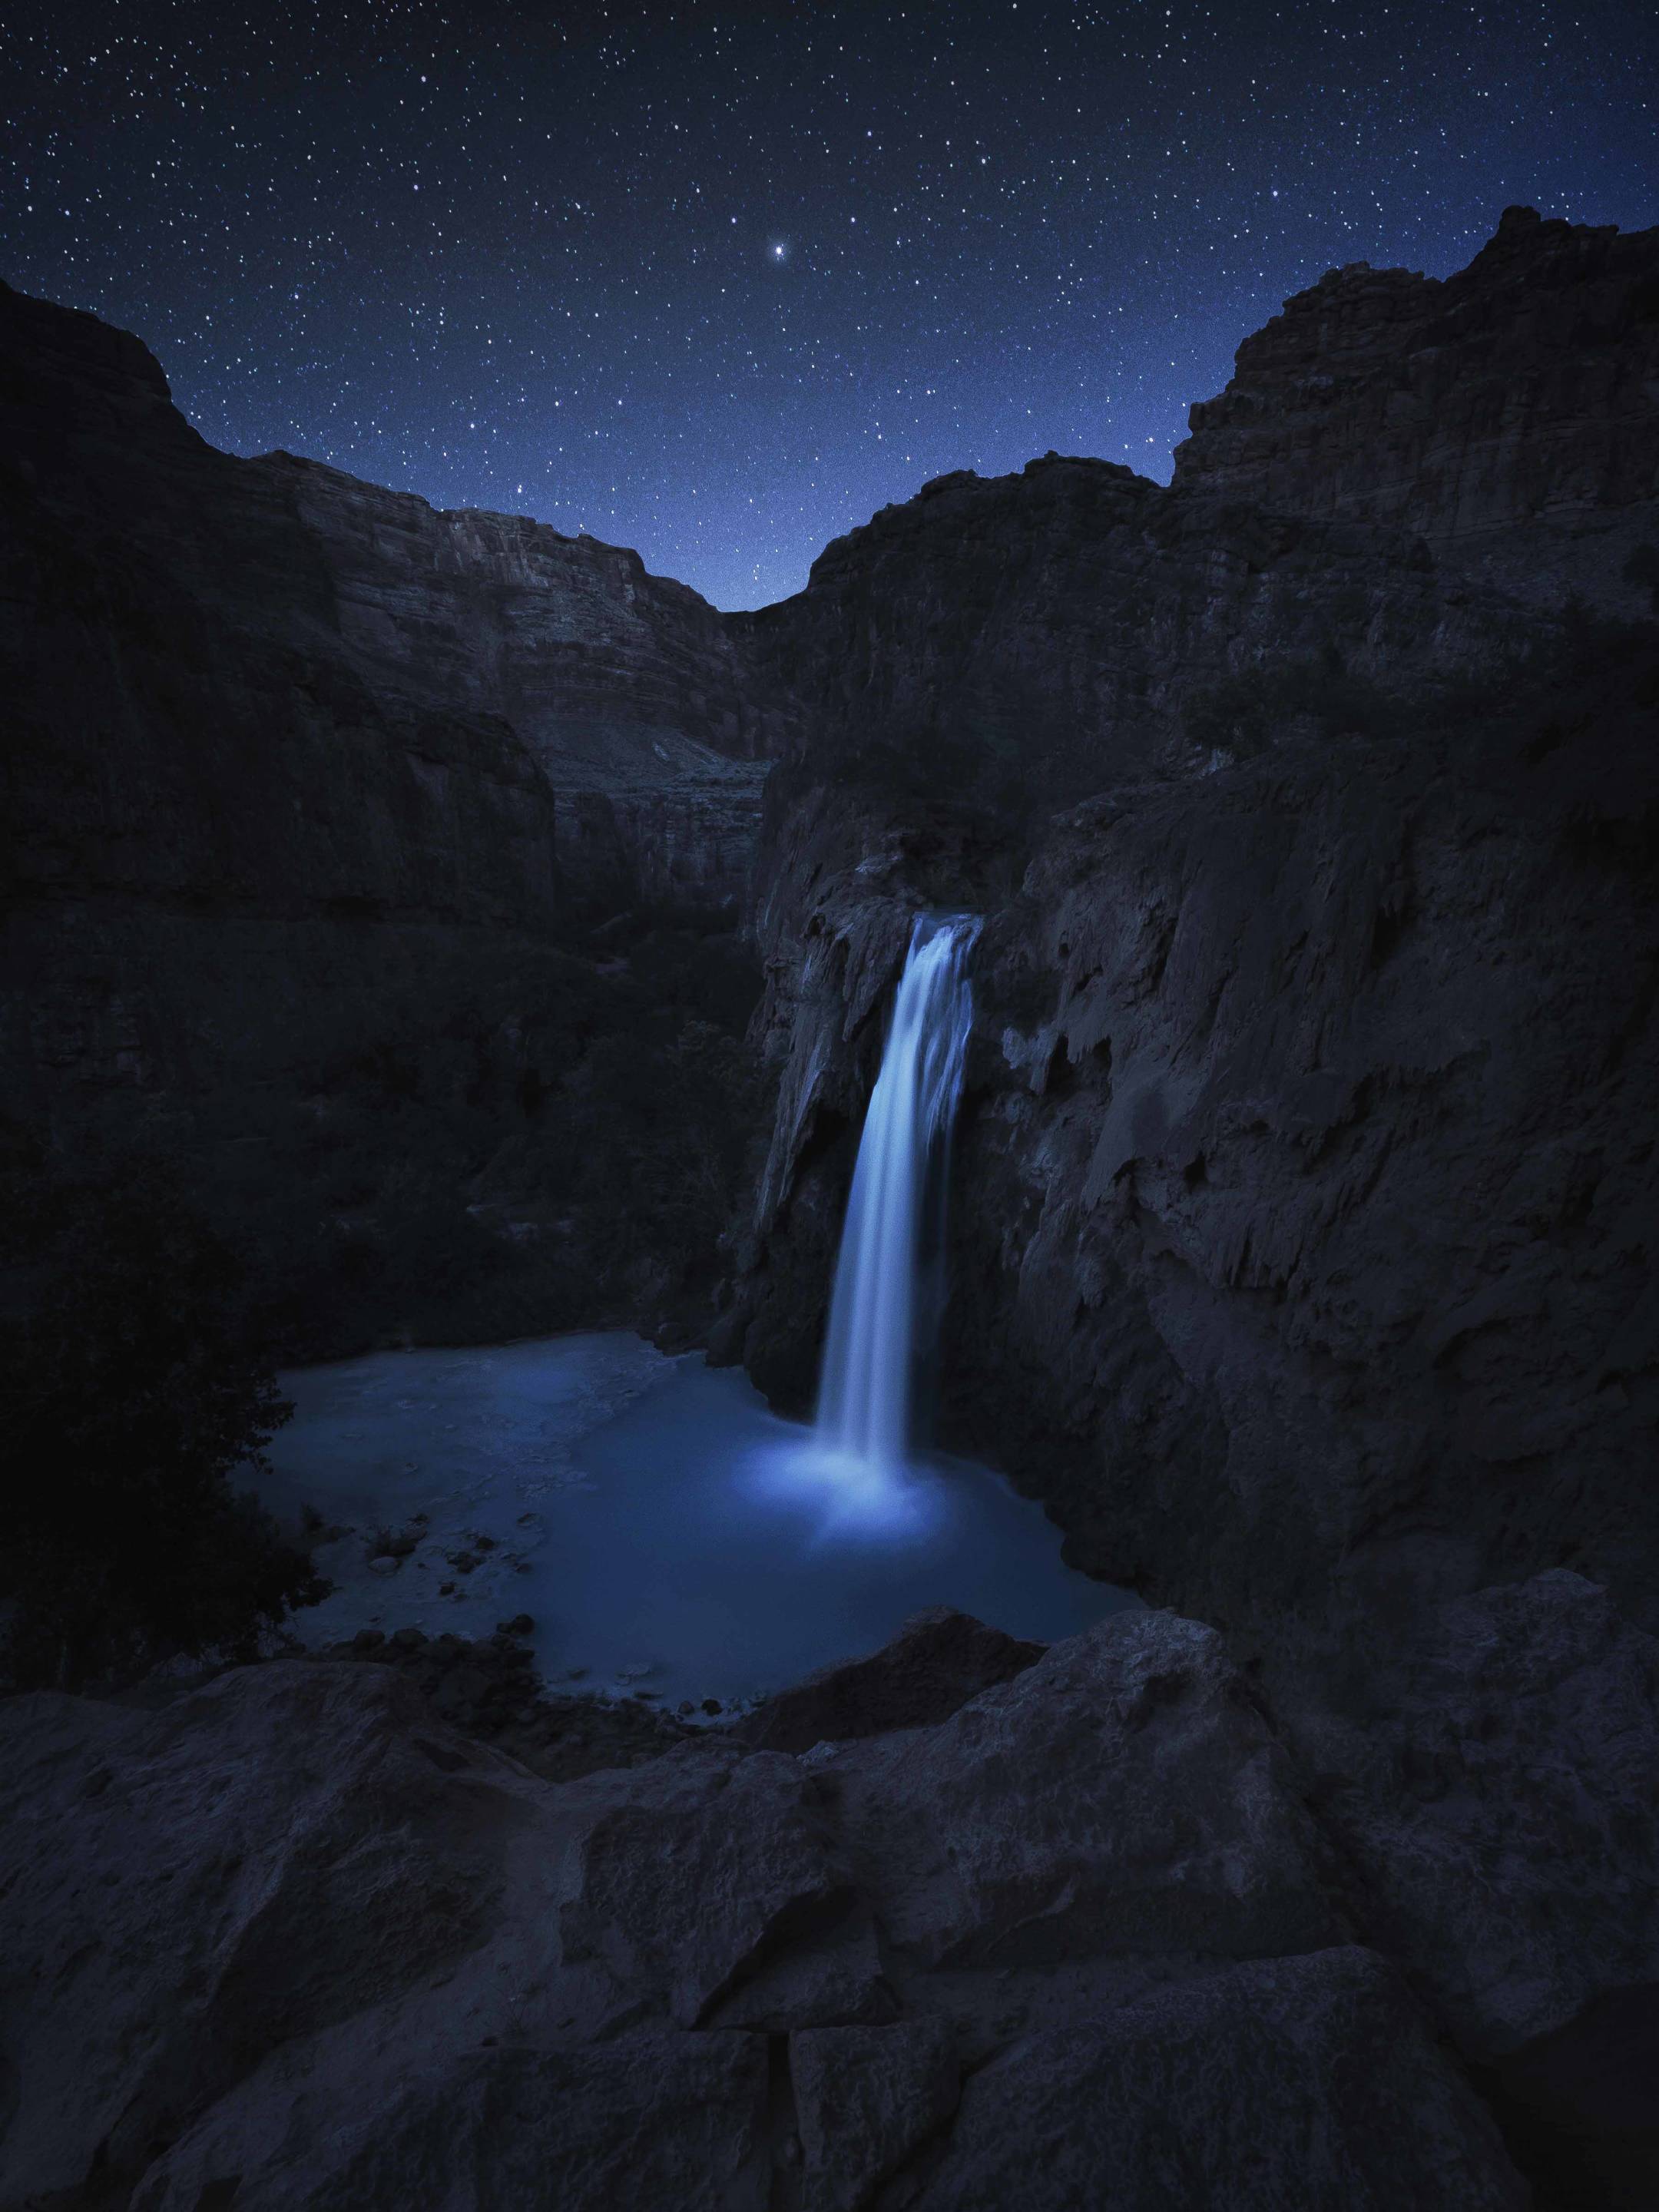 Night photography of the stars over Havasu Falls in Arizona